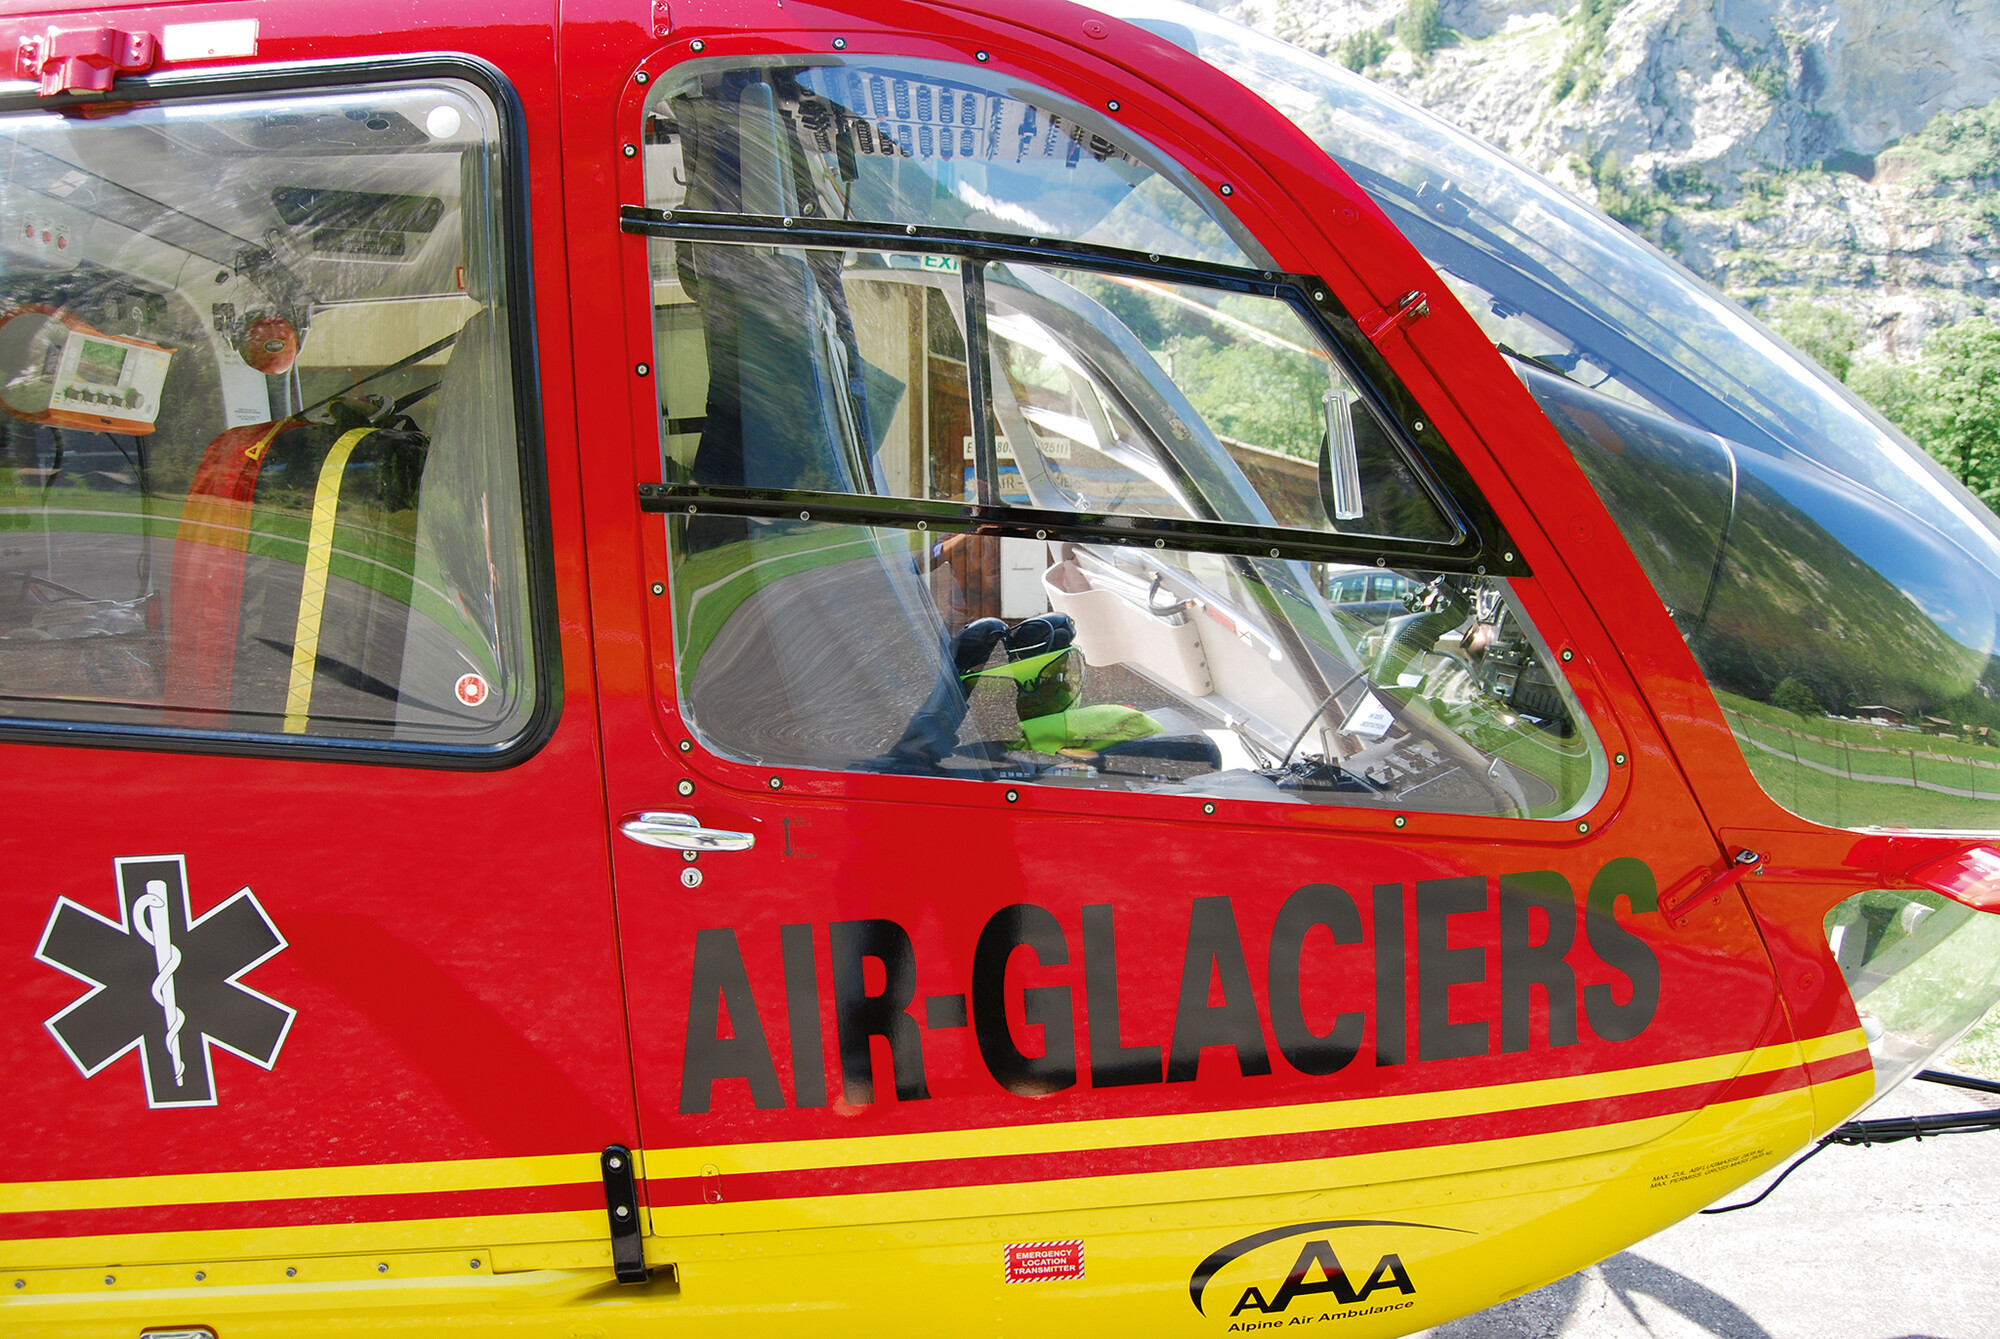 1:72 EC135 Air Glaciers Modellbausatz des EC135 Air-Glaciers Rettungshubschraubers. Air-Gl